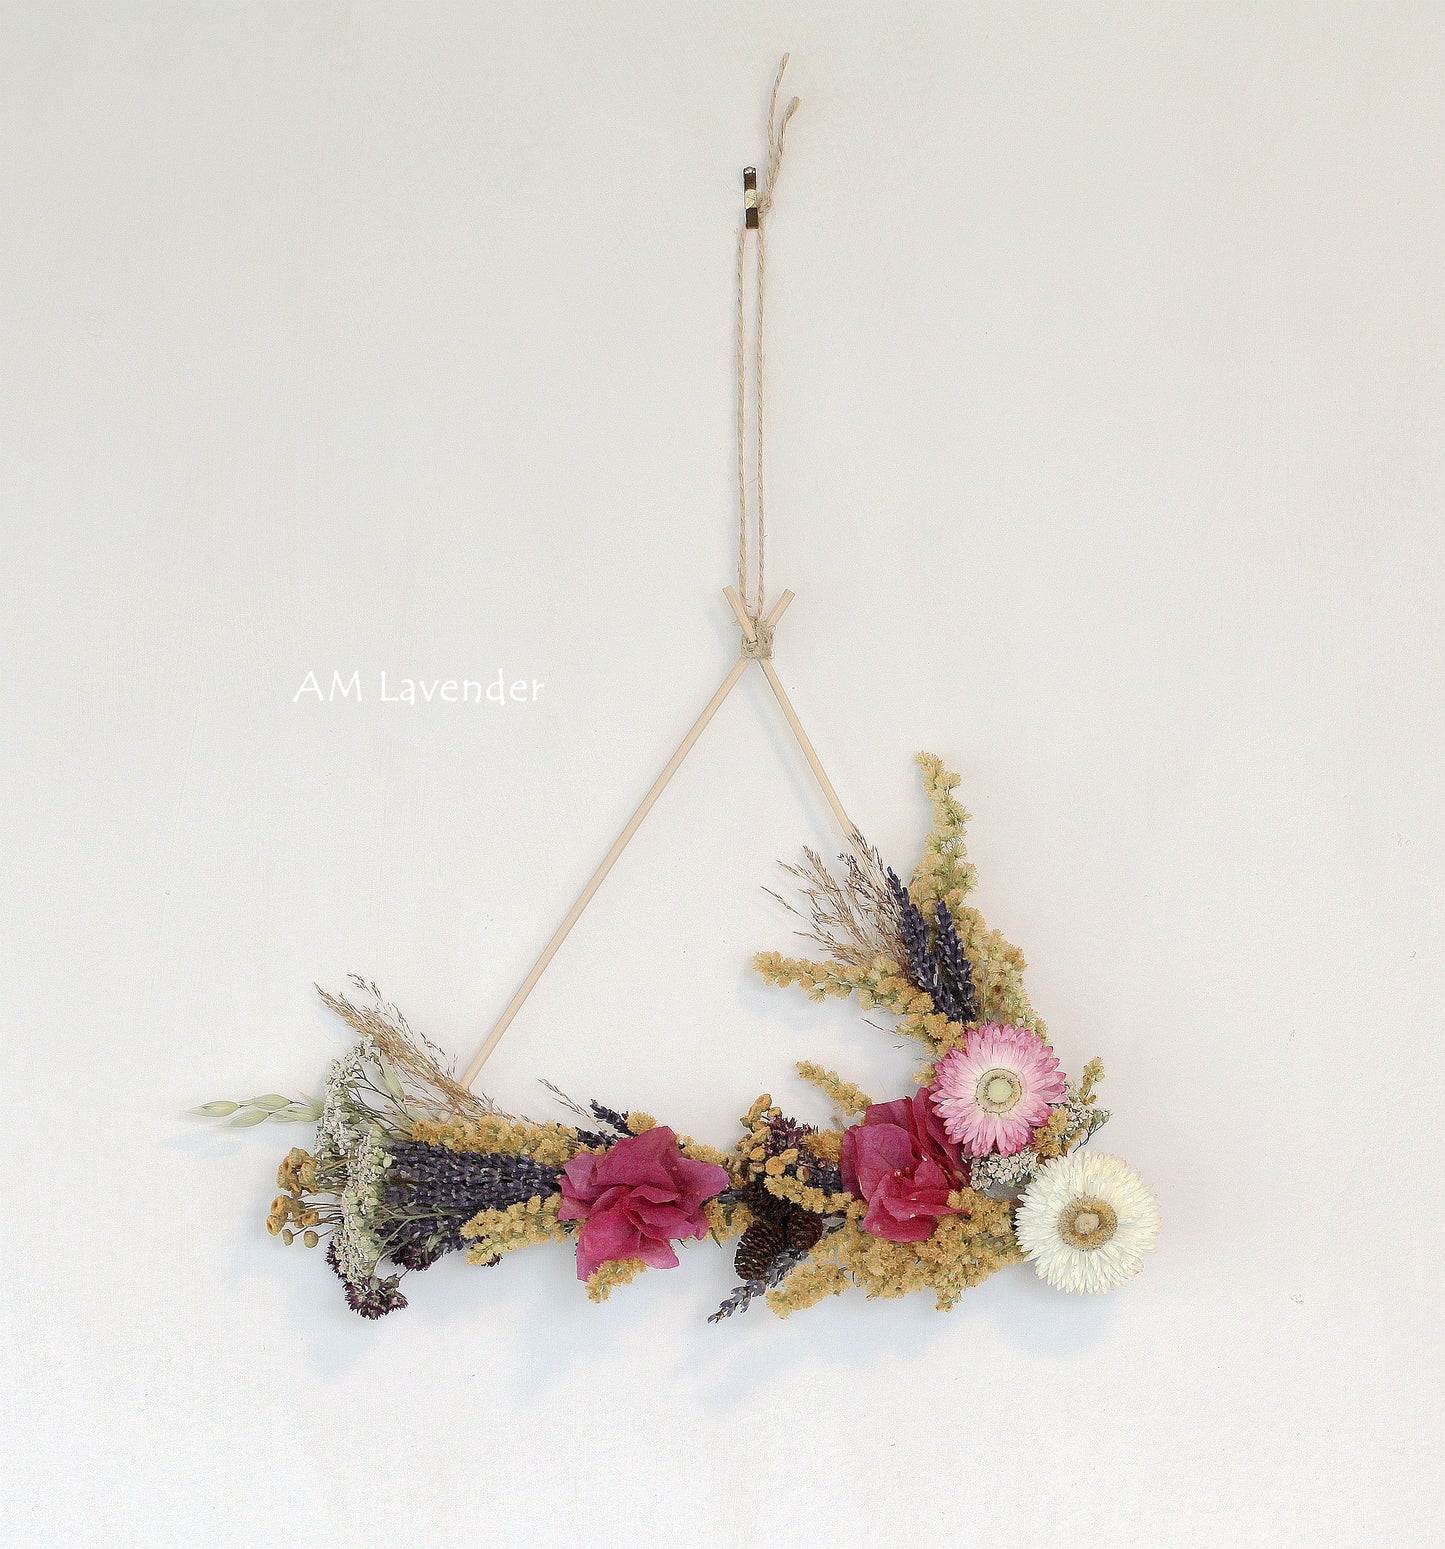 Dried Flower Wreath: Fall | AM Lavender